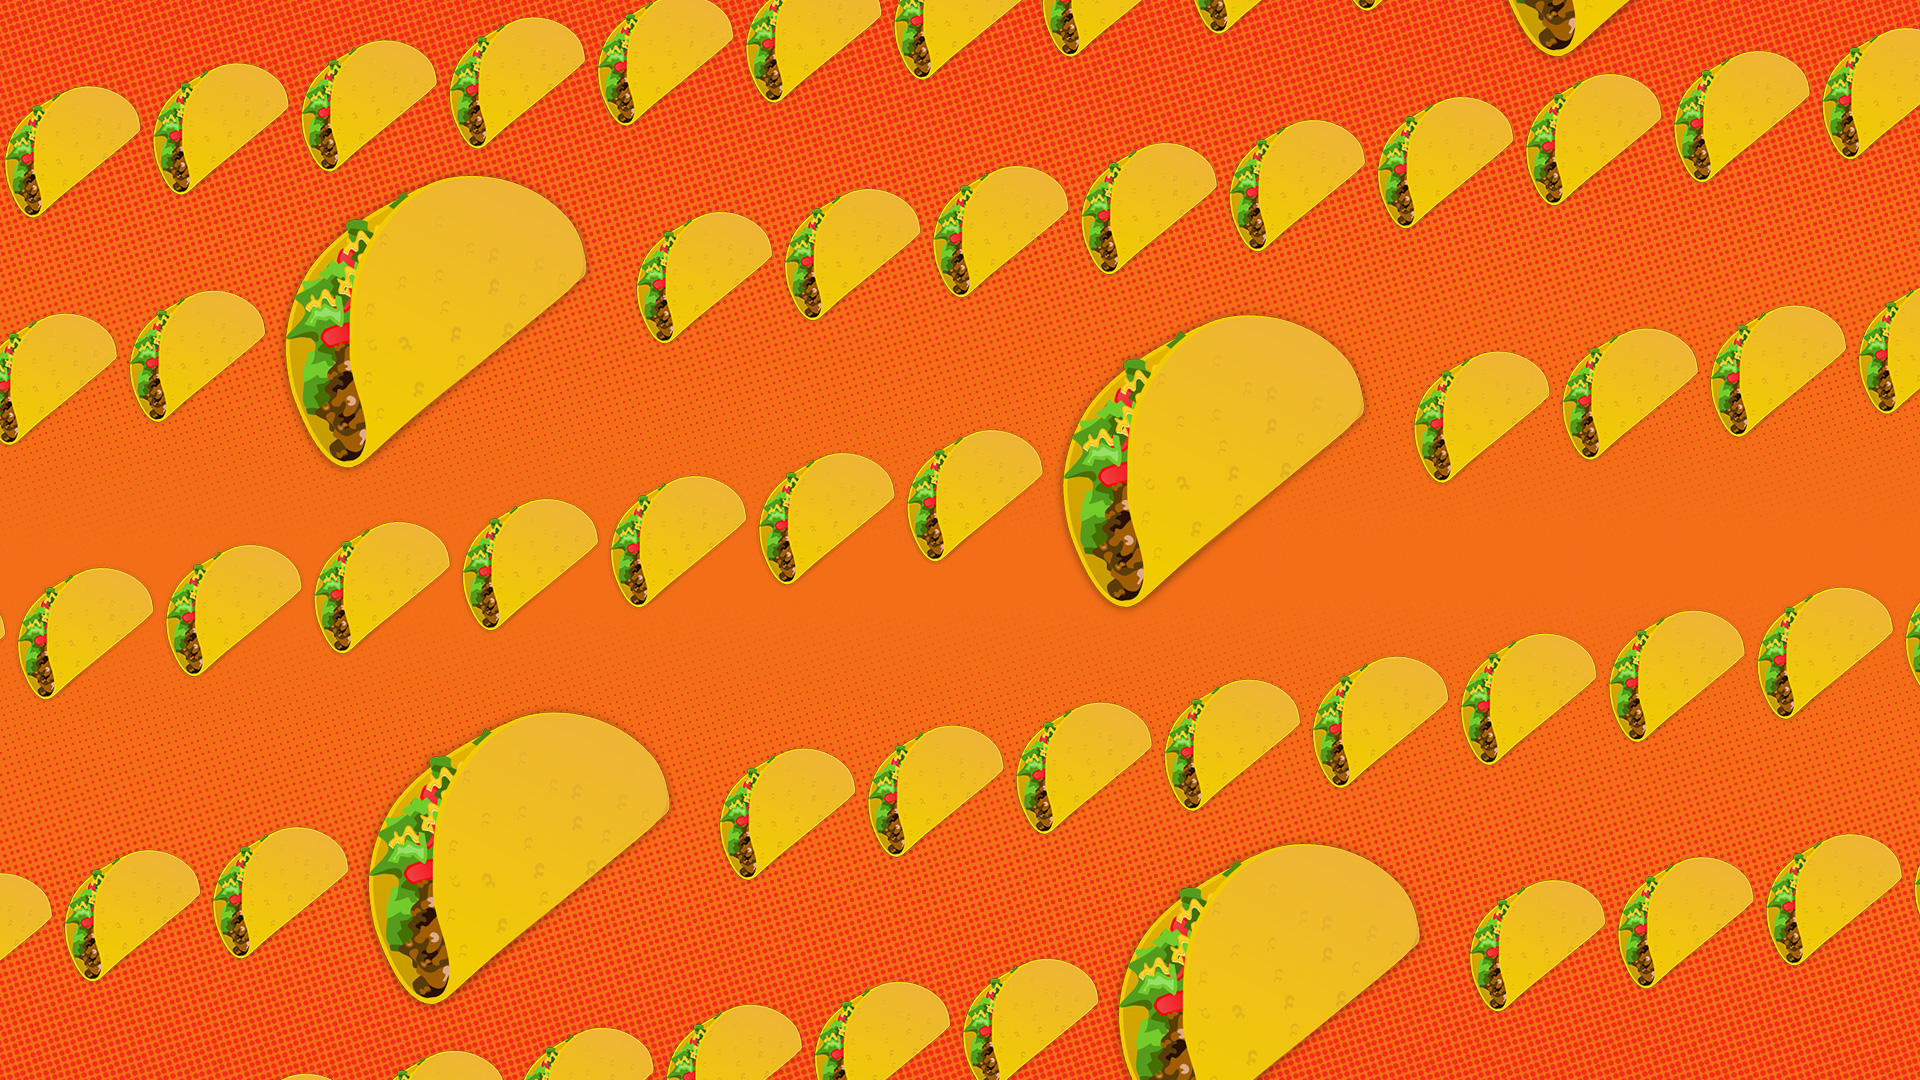 Taco Wallpaper Images  Free Download on Freepik